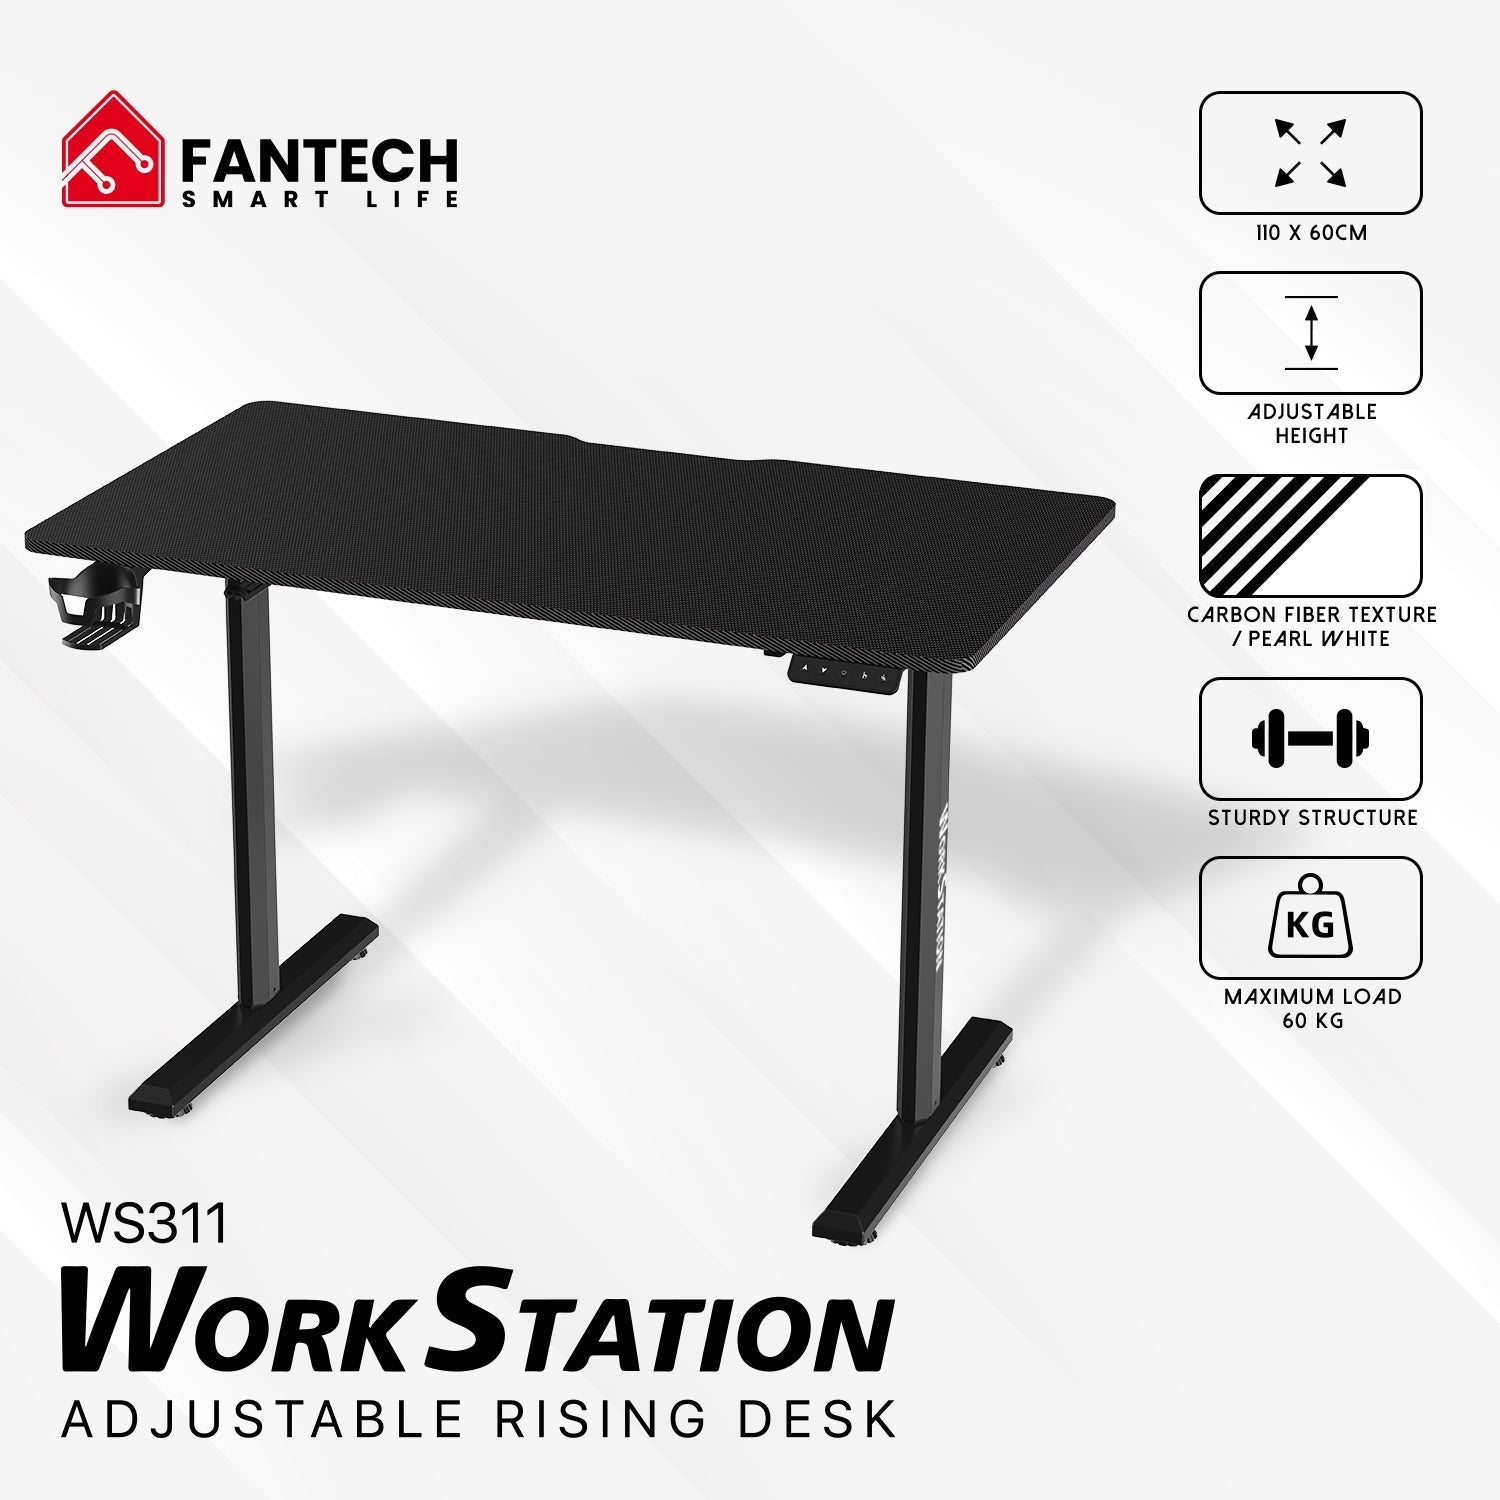 Fantech WS311 Work Station Adjustable Rising Desk JOD 130